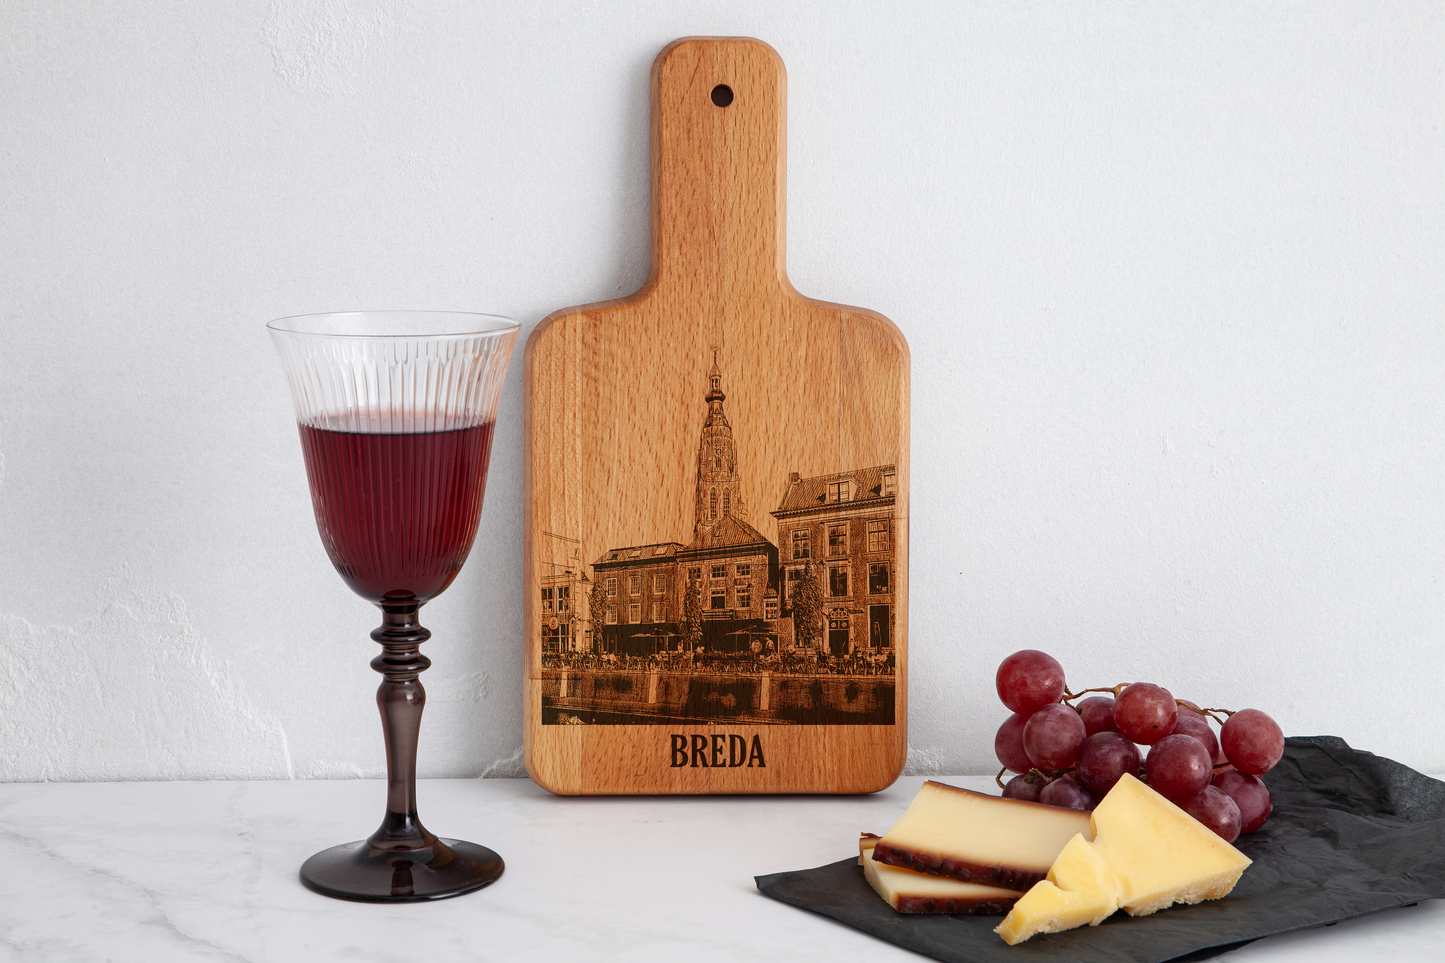 Breda, Grote Kerk, cheese board, in kitchen